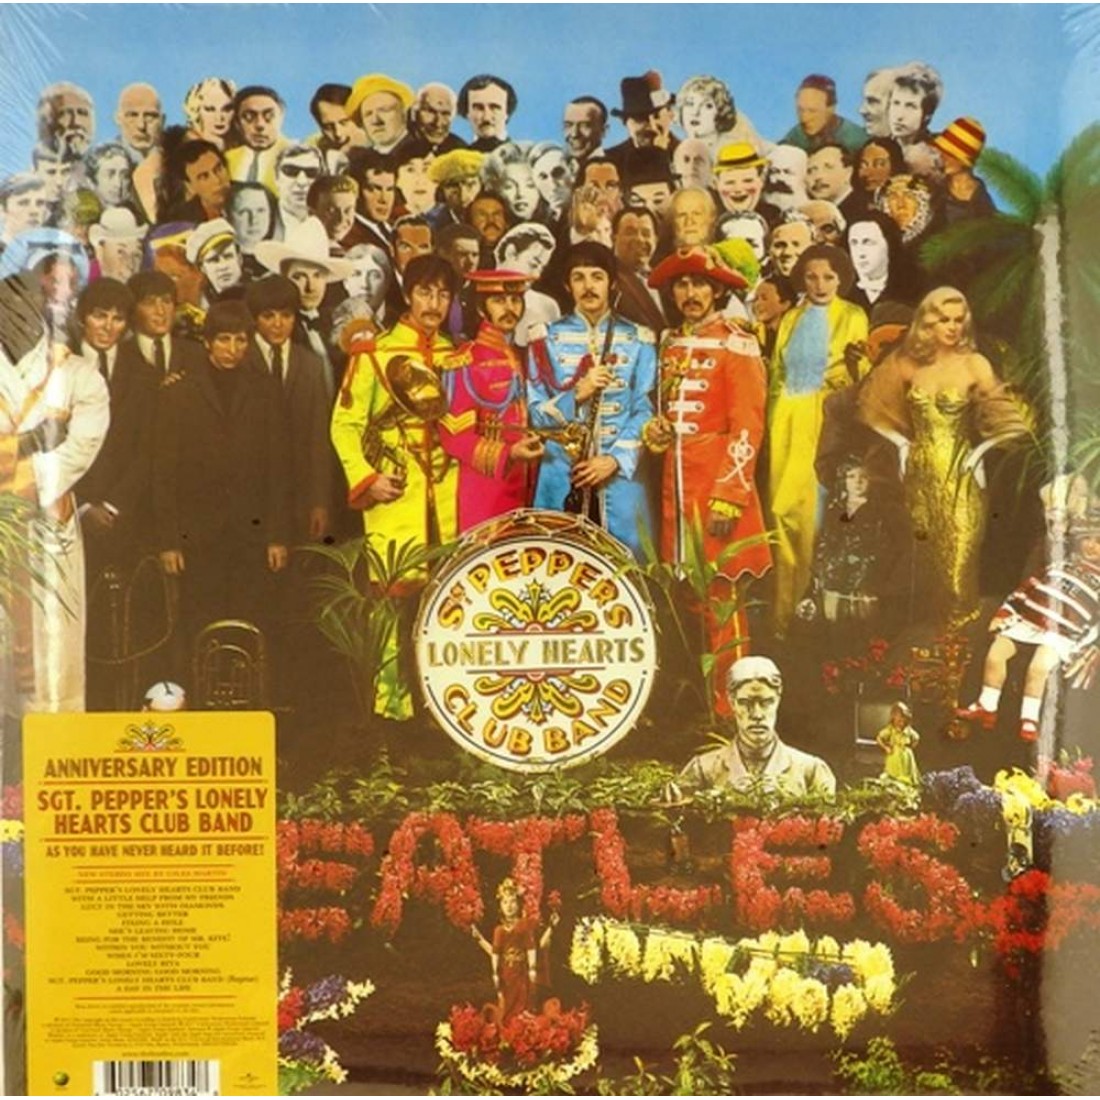 Beatles sgt pepper lonely. Sgt Pepper's Lonely Hearts Club Band. The Beatles Sgt. Pepper's Lonely Hearts Club Band 1967. Винил пластинка Sgt Pepper. Обложке пластинки Sgt. Pepper's Lonely Hearts Club Band (1967 г.)..